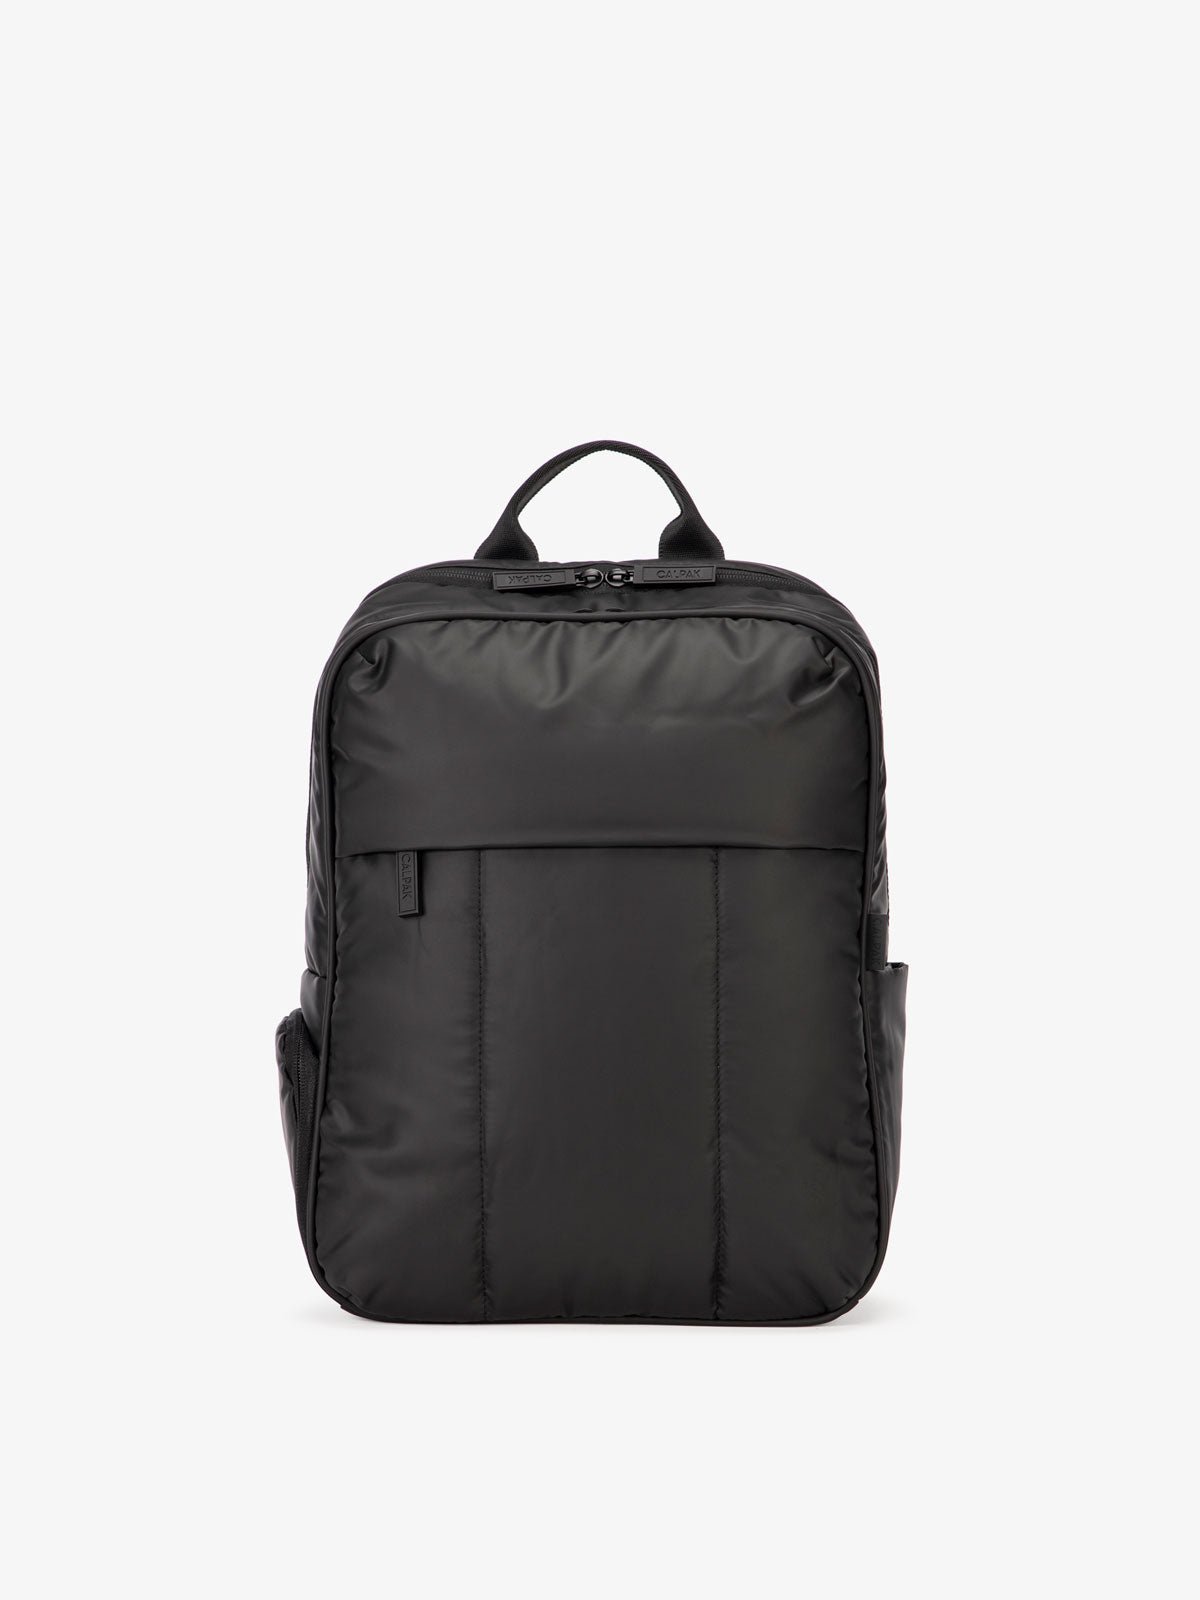 CALPAK Luka laptop backpack in black